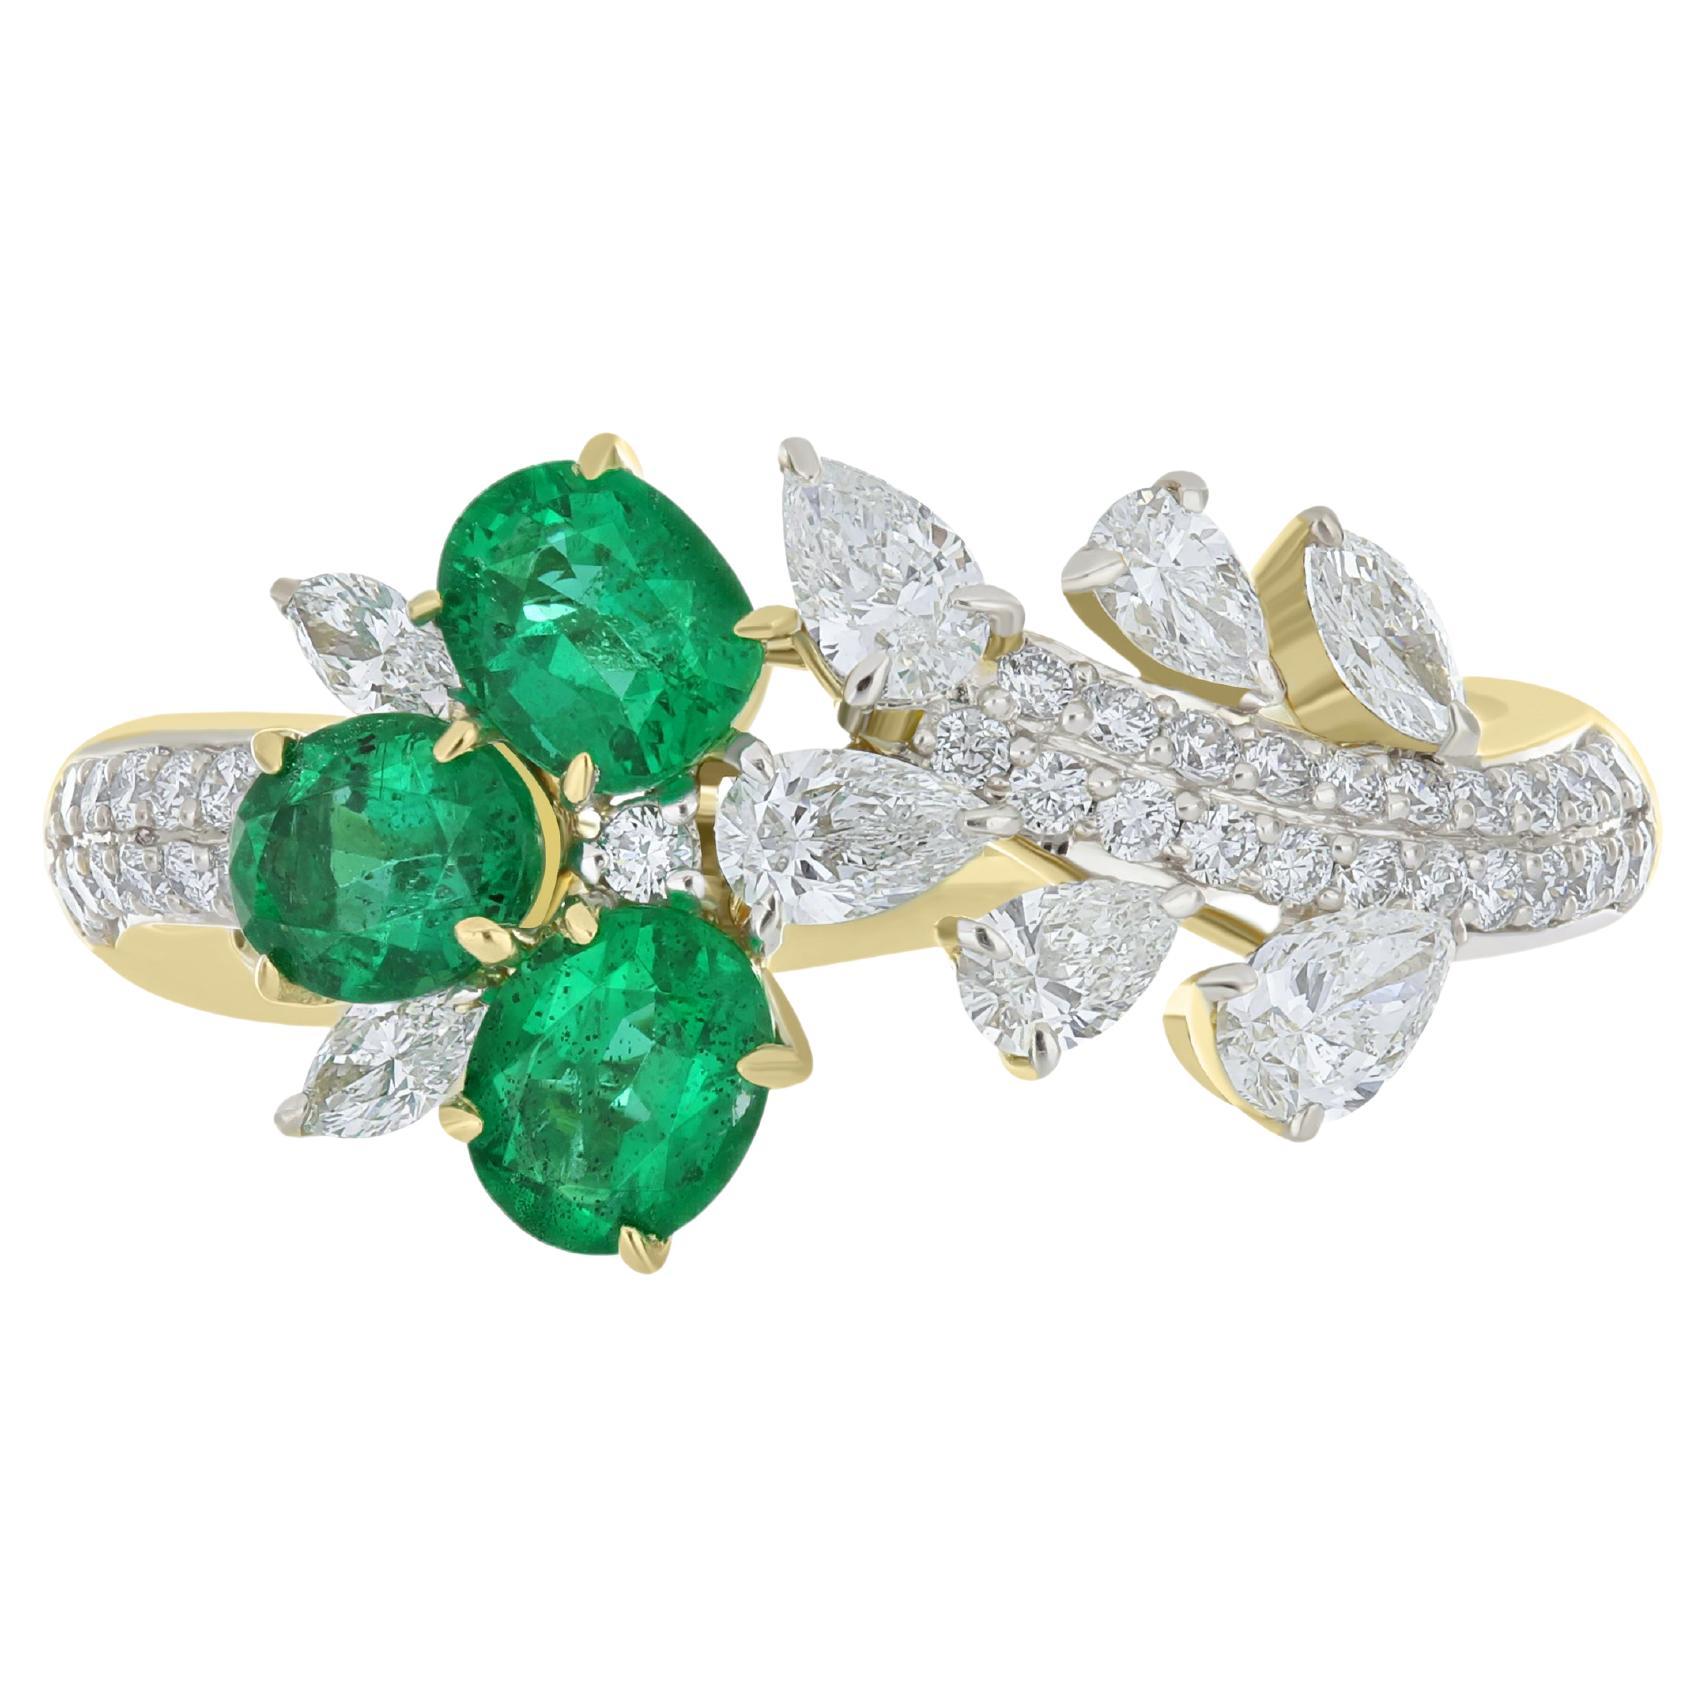 Emerald And Diamond Ring 18K White Gold handcraft Jewelry For Anniversary Gift